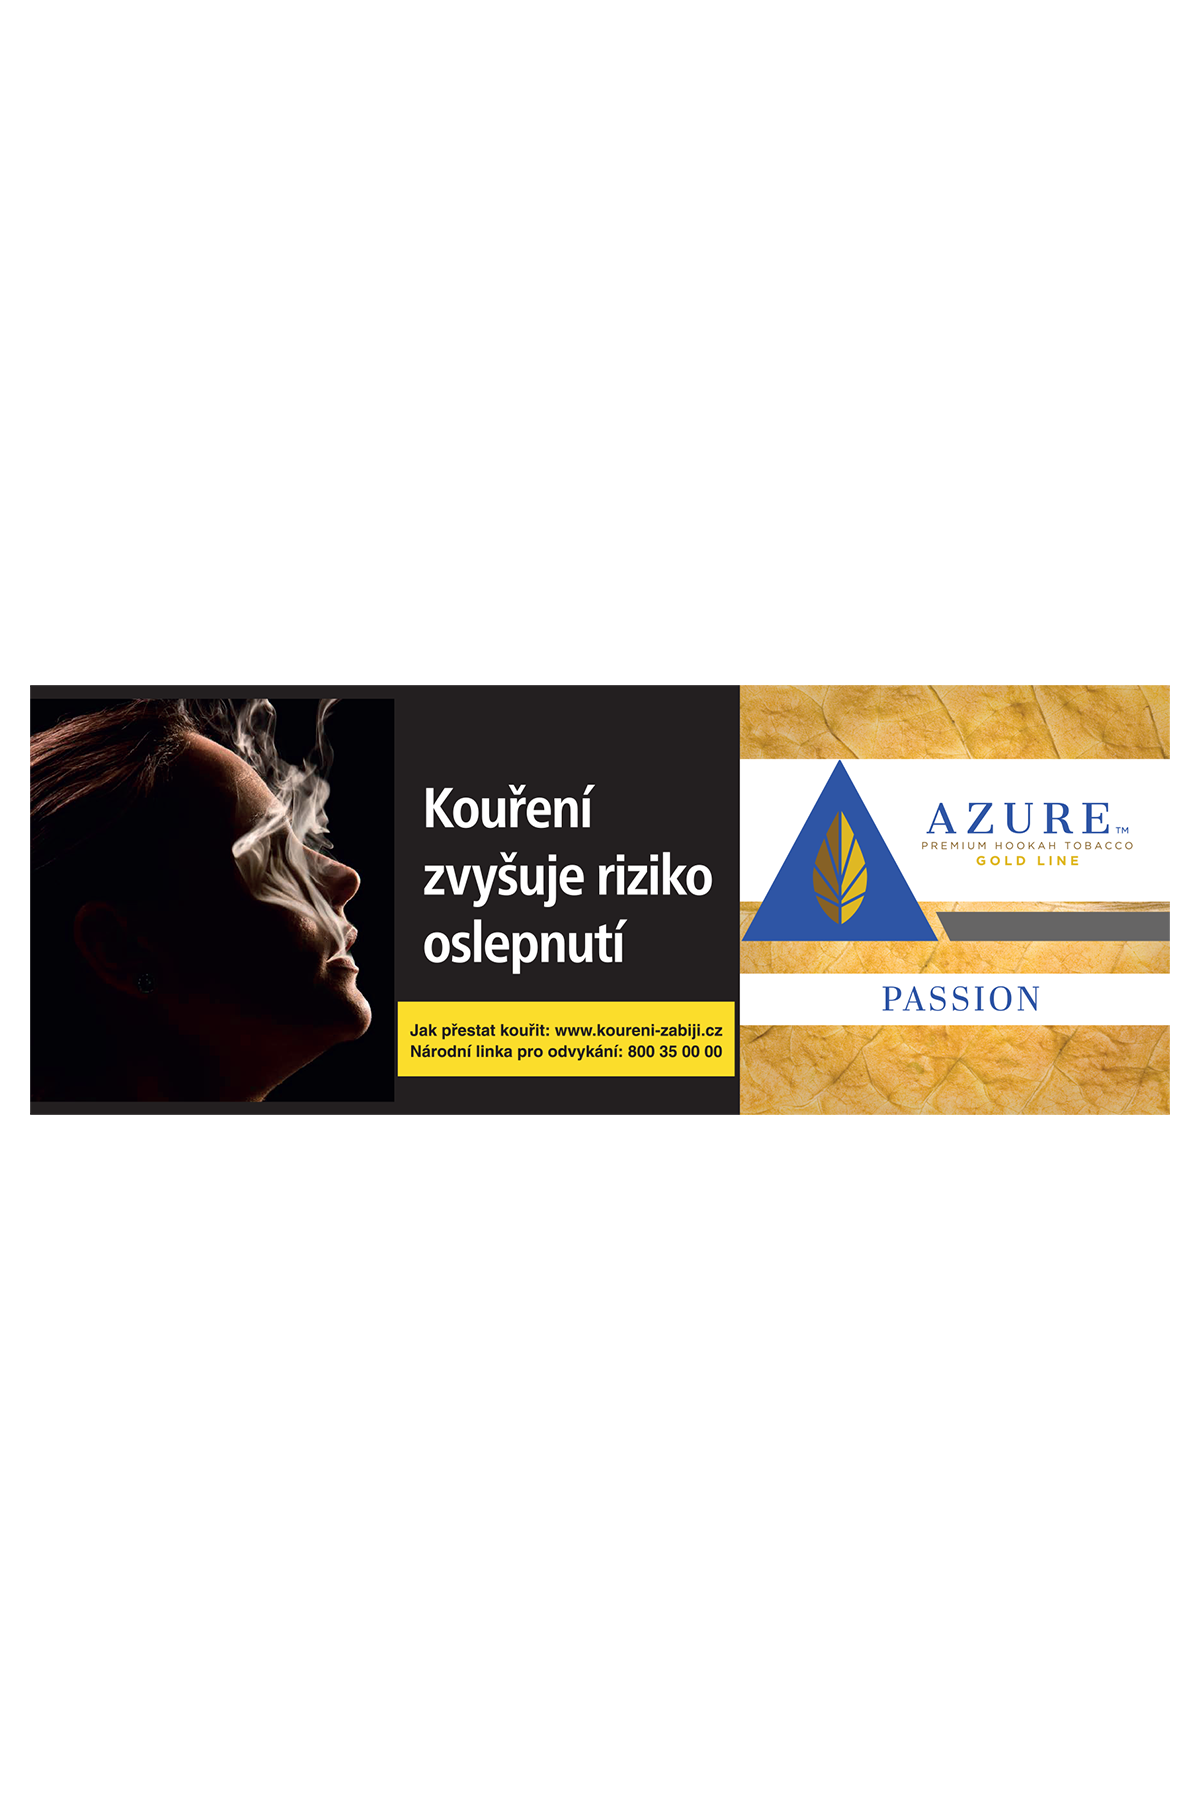 Tabák - Azure Gold 250g - Passion